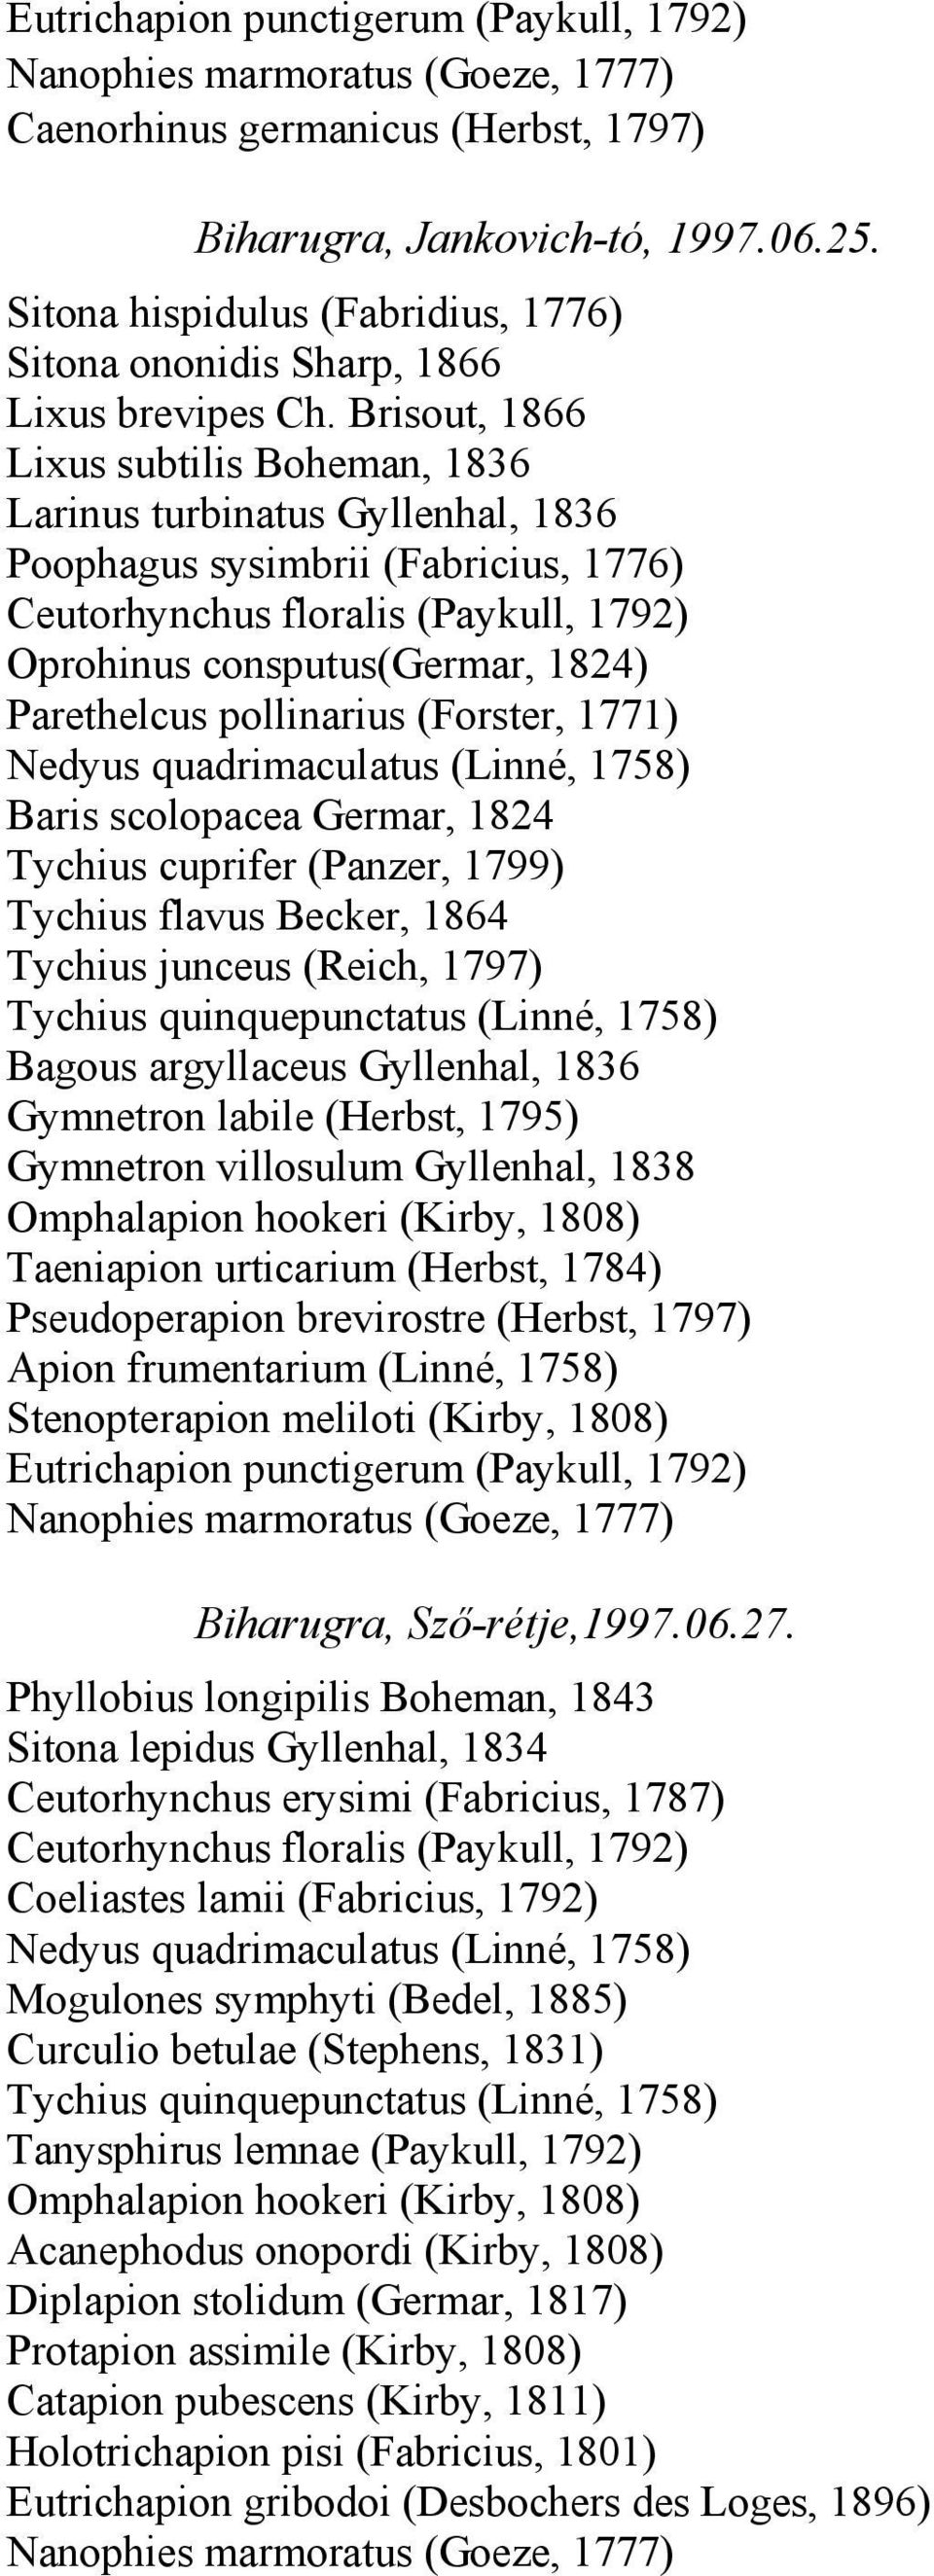 Parethelcus pollinarius (Forster, 1771) Baris scolopacea Germar, 1824 Tychius cuprifer (Panzer, 1799) Tychius flavus Becker, 1864 Tychius junceus (Reich, 1797) Bagous argyllaceus Gyllenhal, 1836